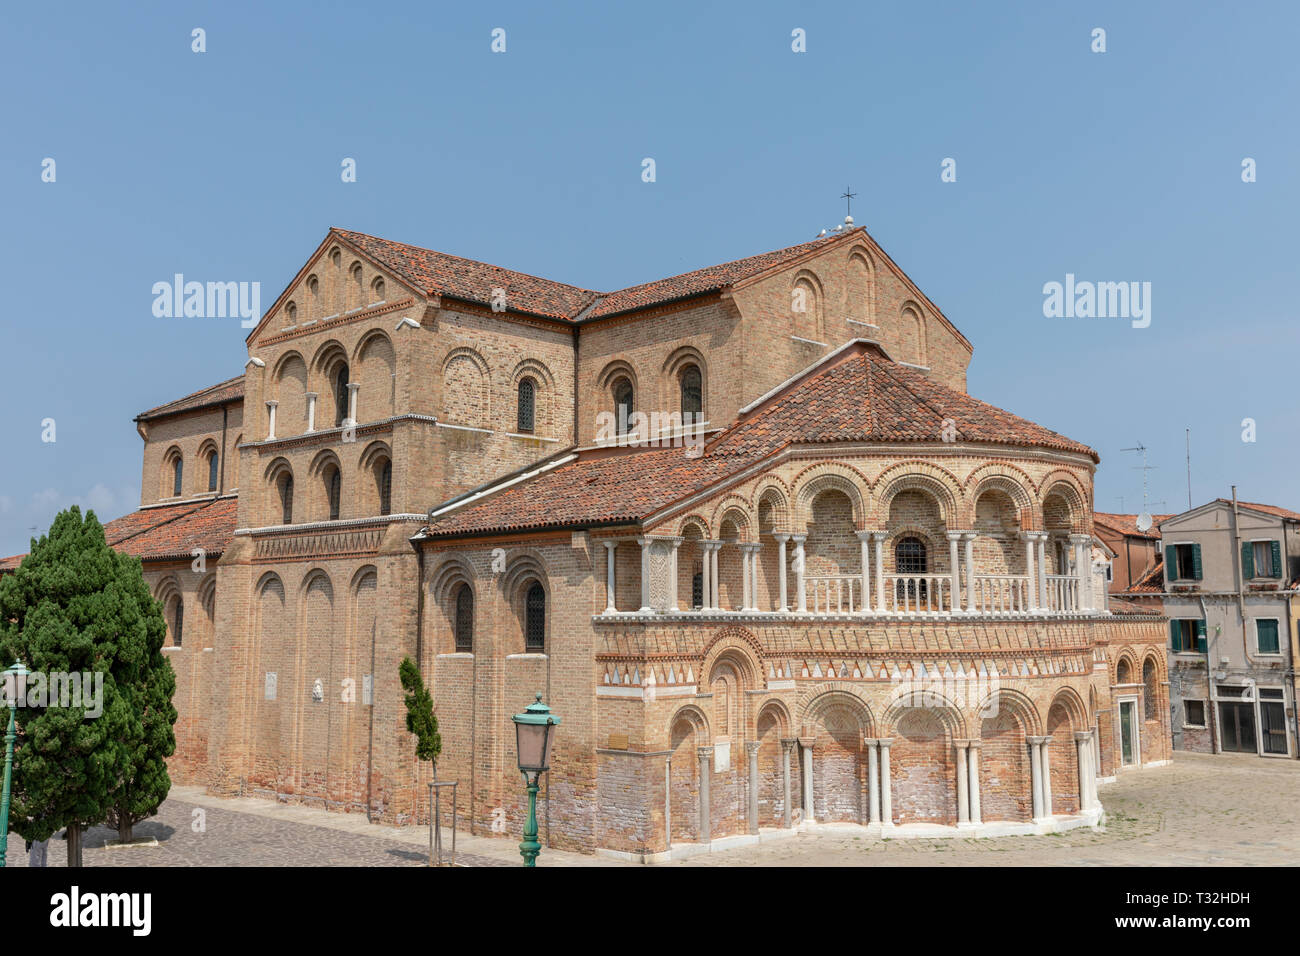 Murano, Venice, Italy - July 2, 2018: Panoramic view of Church of Santa Maria e San Donato is a religious edifice located in Murano. It is known for i Stock Photo